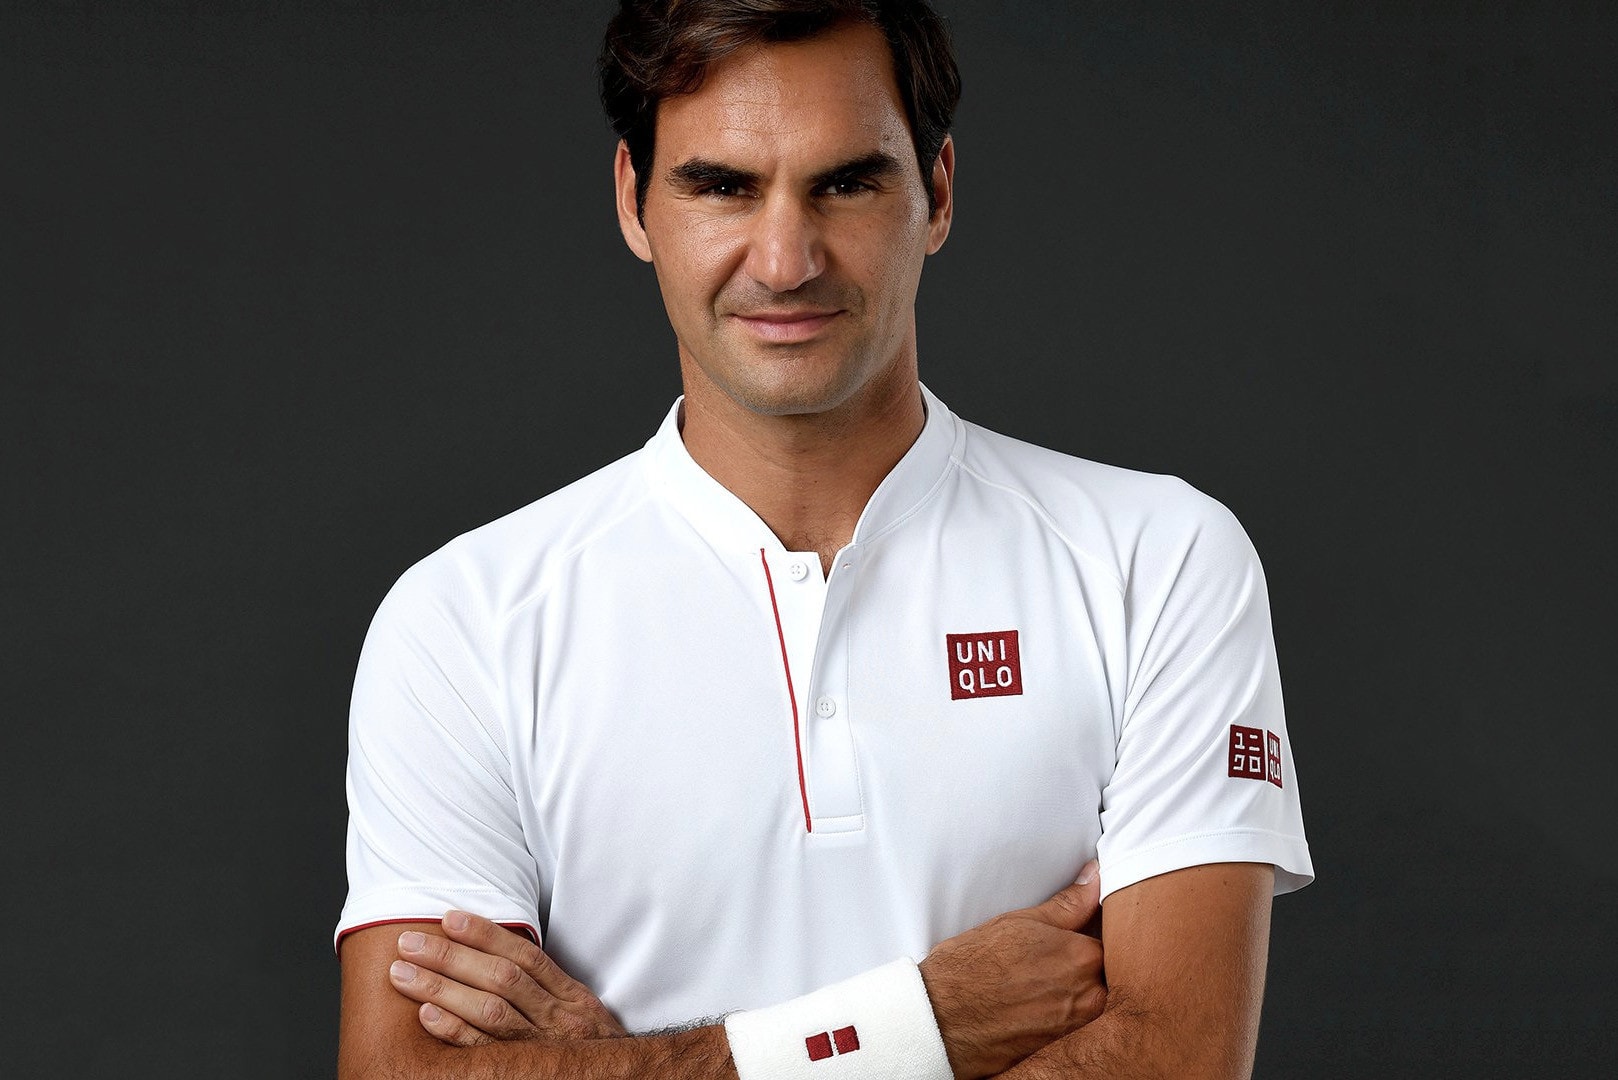 Uniqlo Roger Federer Game Wear Set Pre-Order Details Purchase Buy Cop Coming Soon Tennis Nike Wimbledon Japan